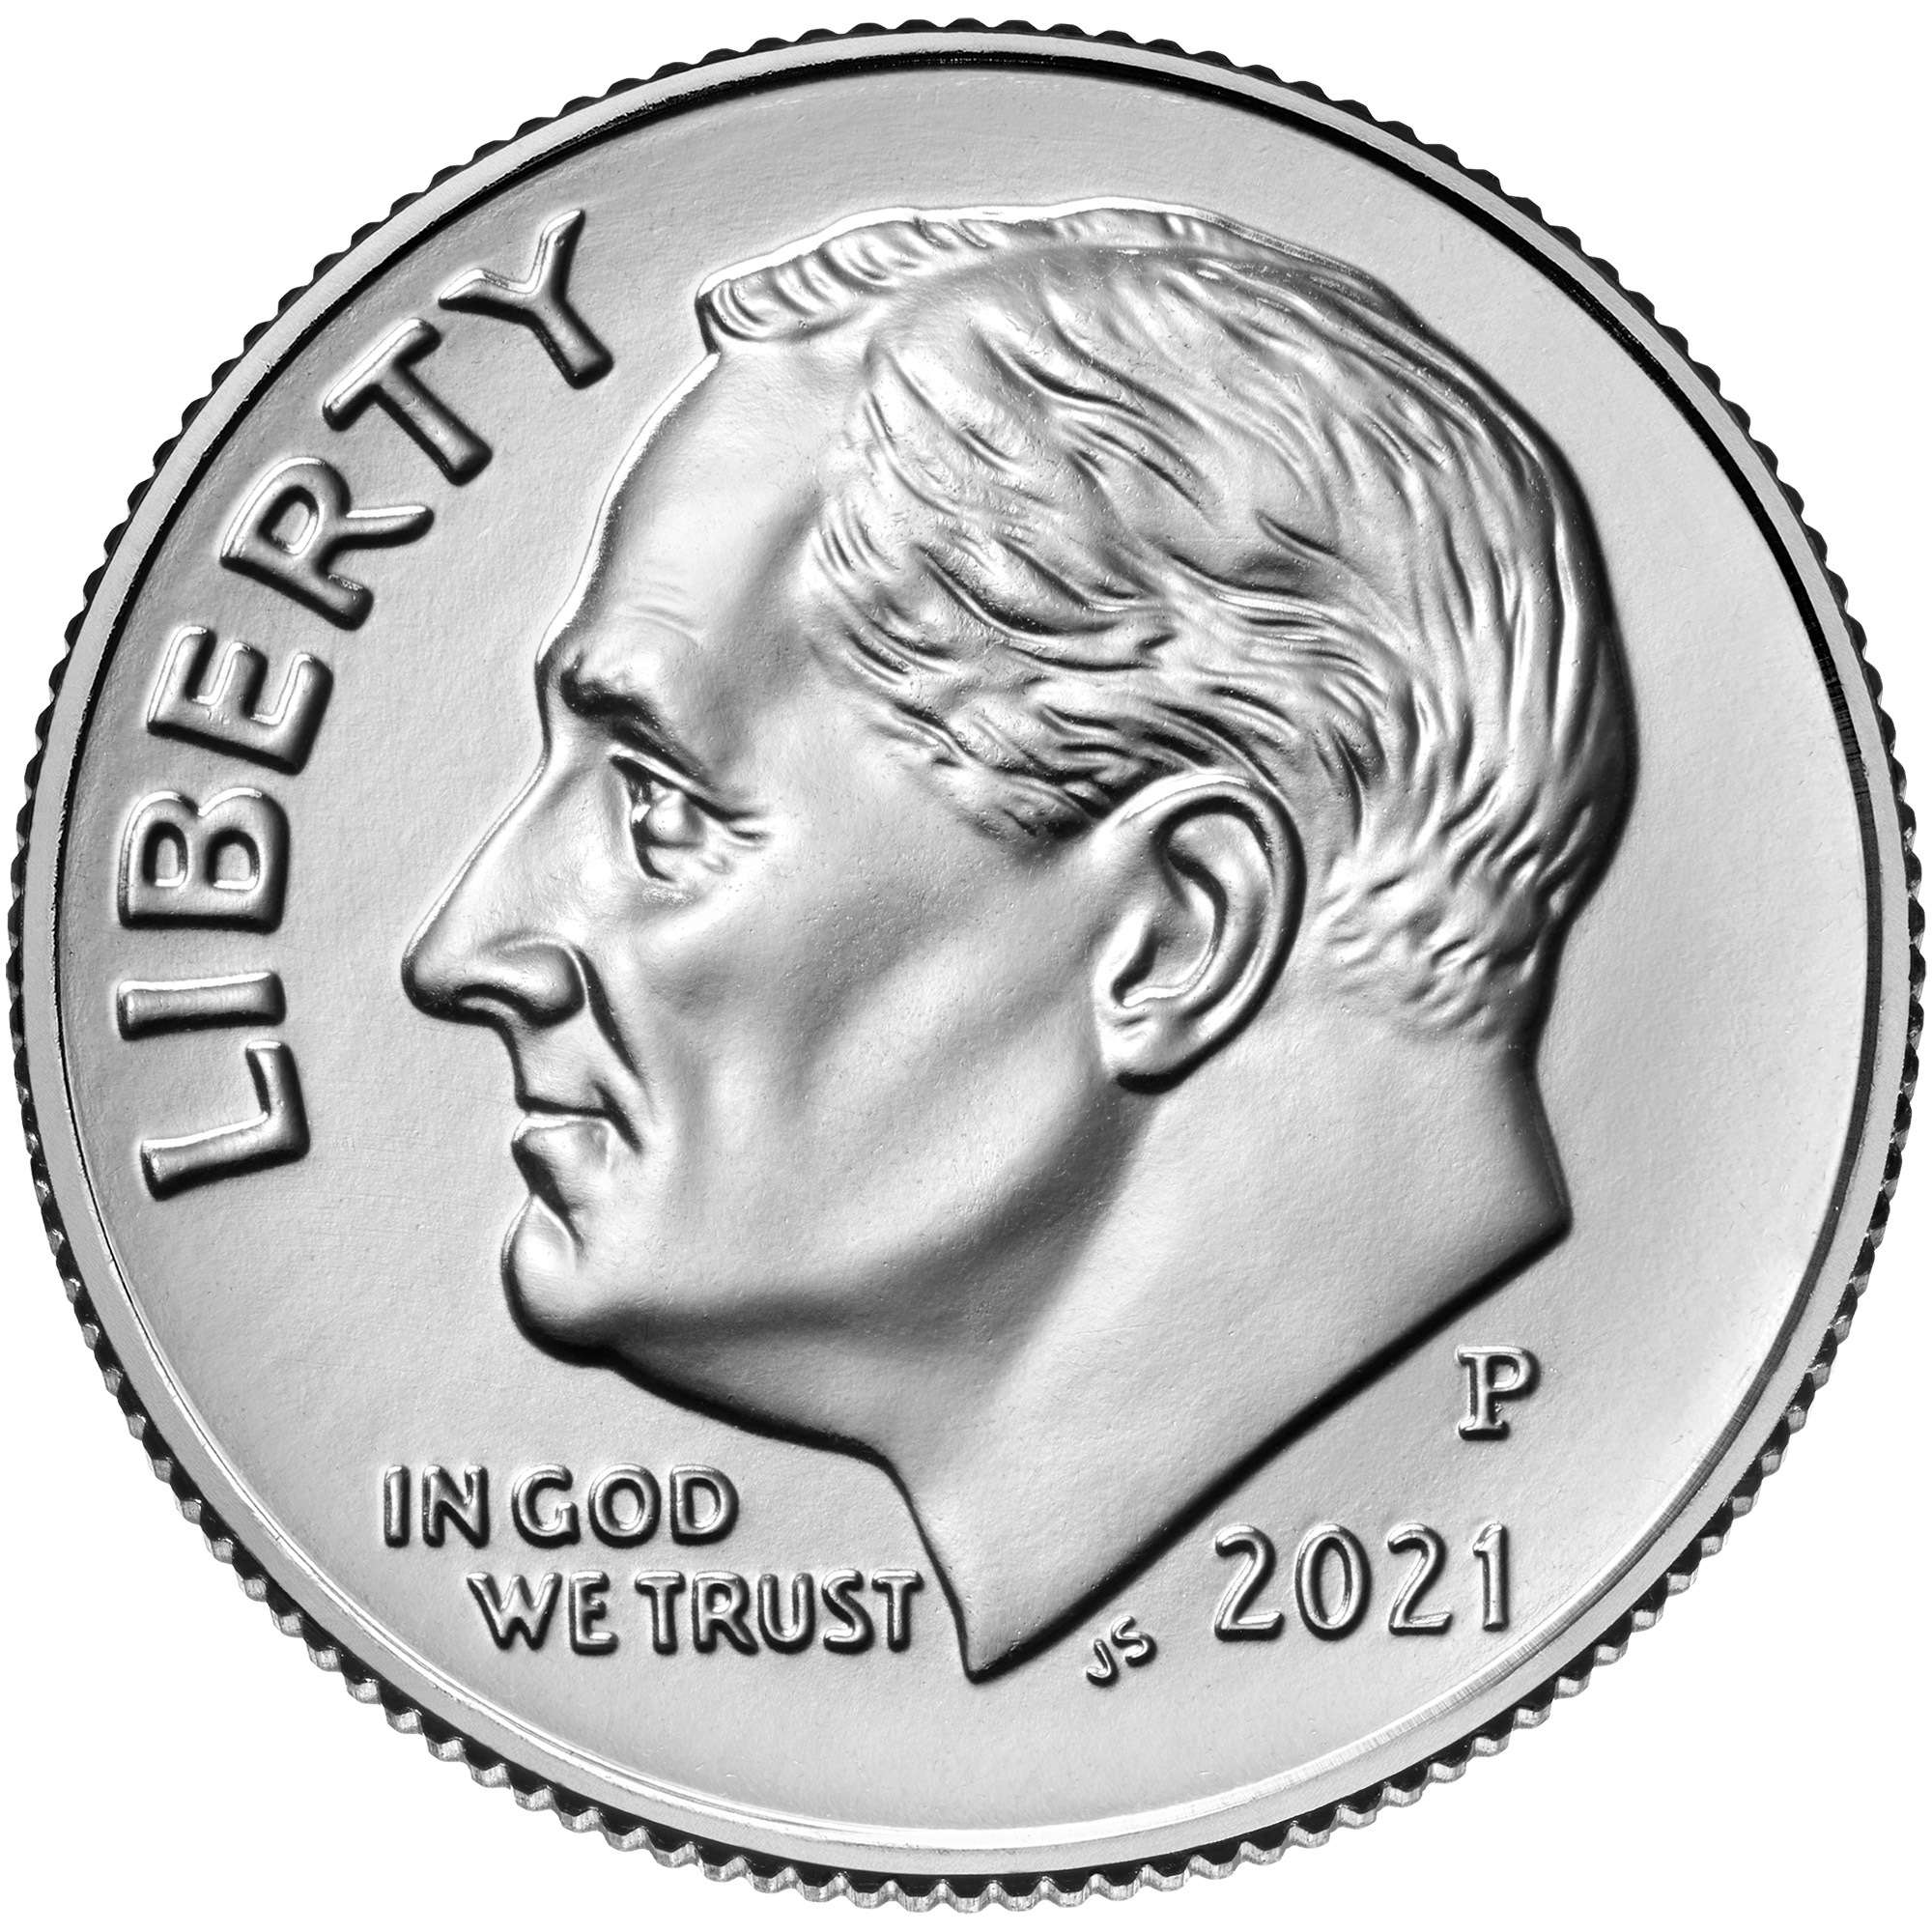 Picture of a U.S. dime.